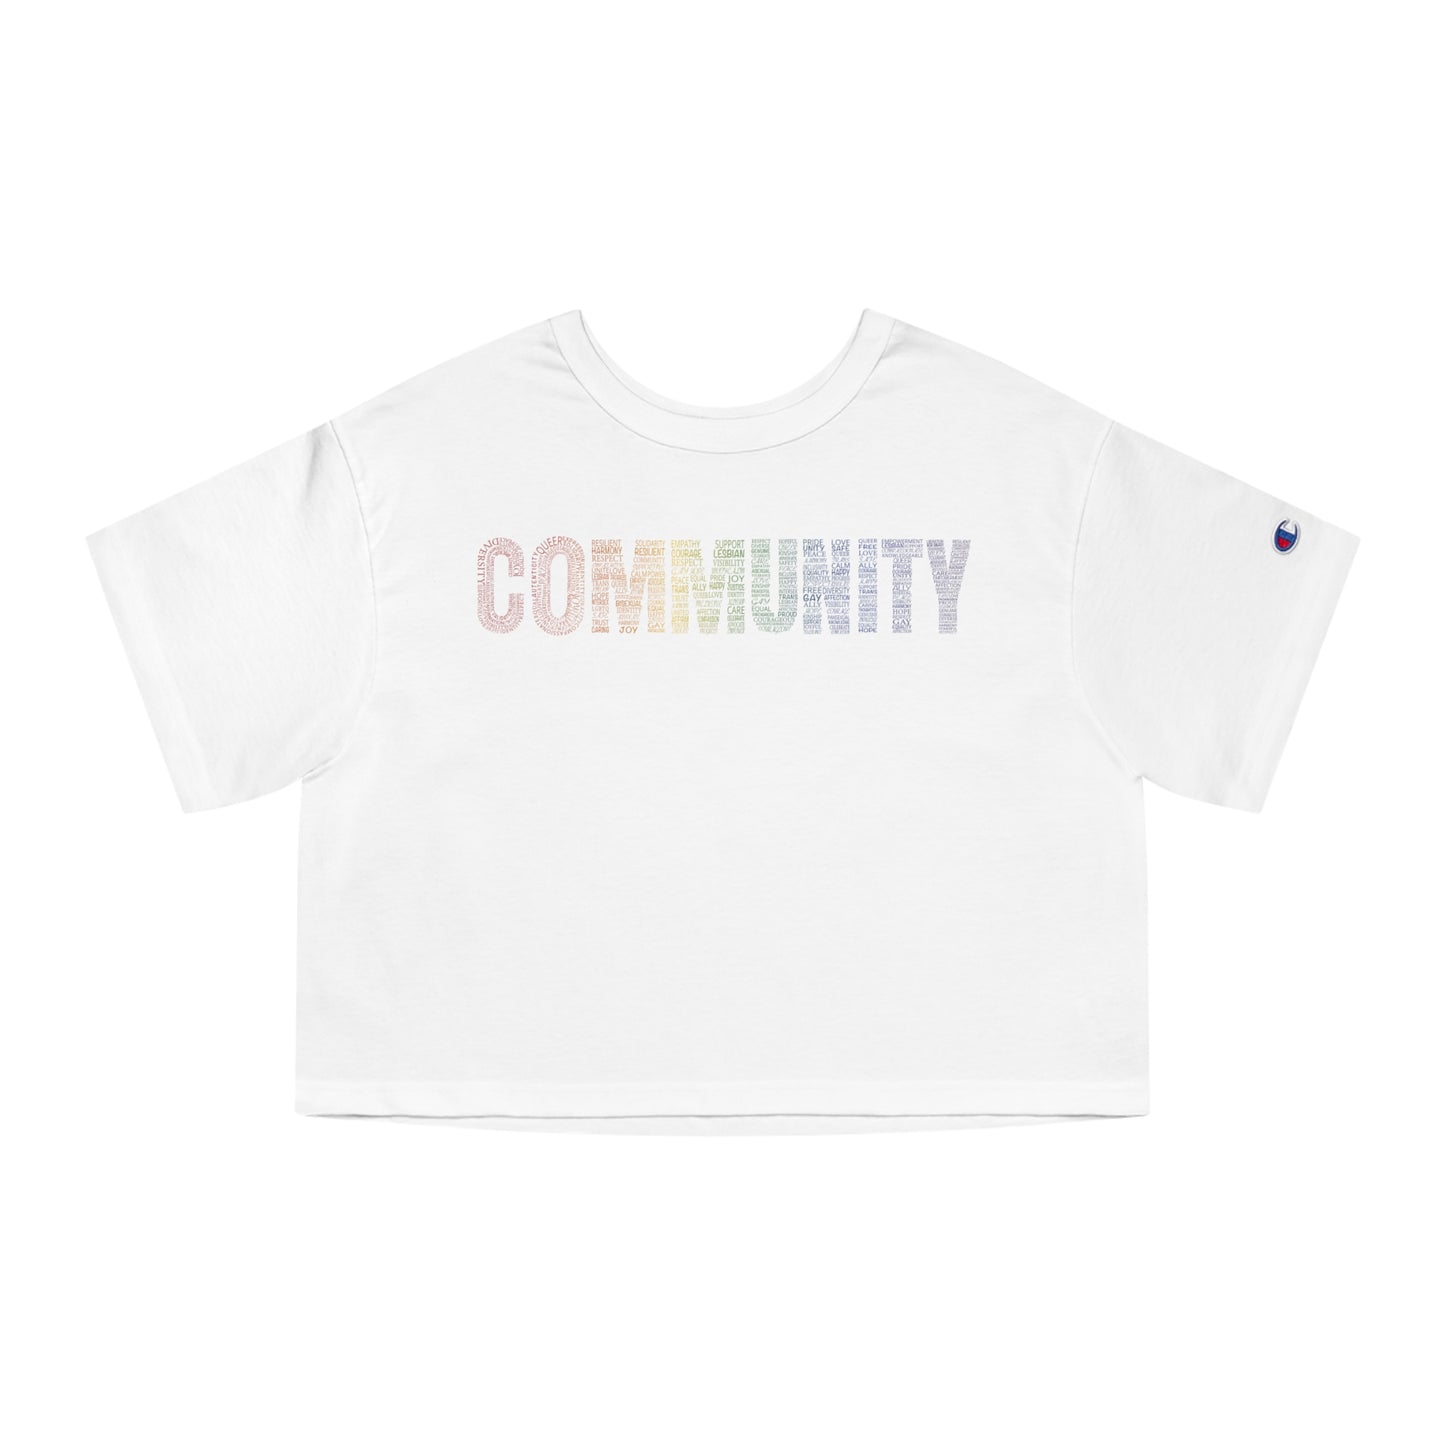 Community Calligram Cropped T-Shirt